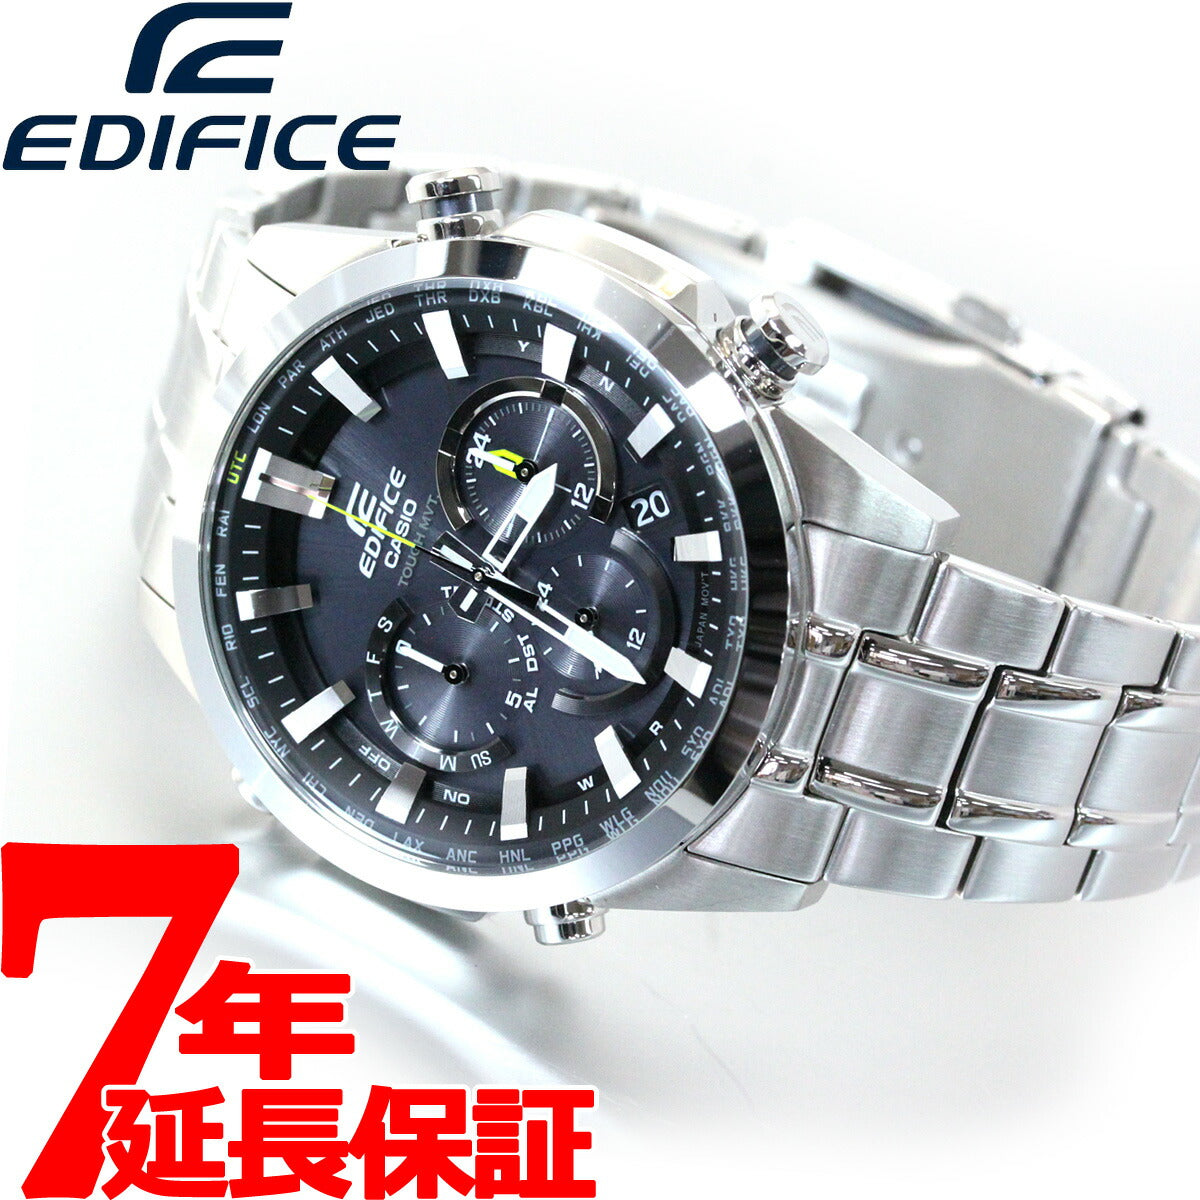 EQW-T660BL EDIFICE カシオ電波ソーラー 腕時計   値下げ可能